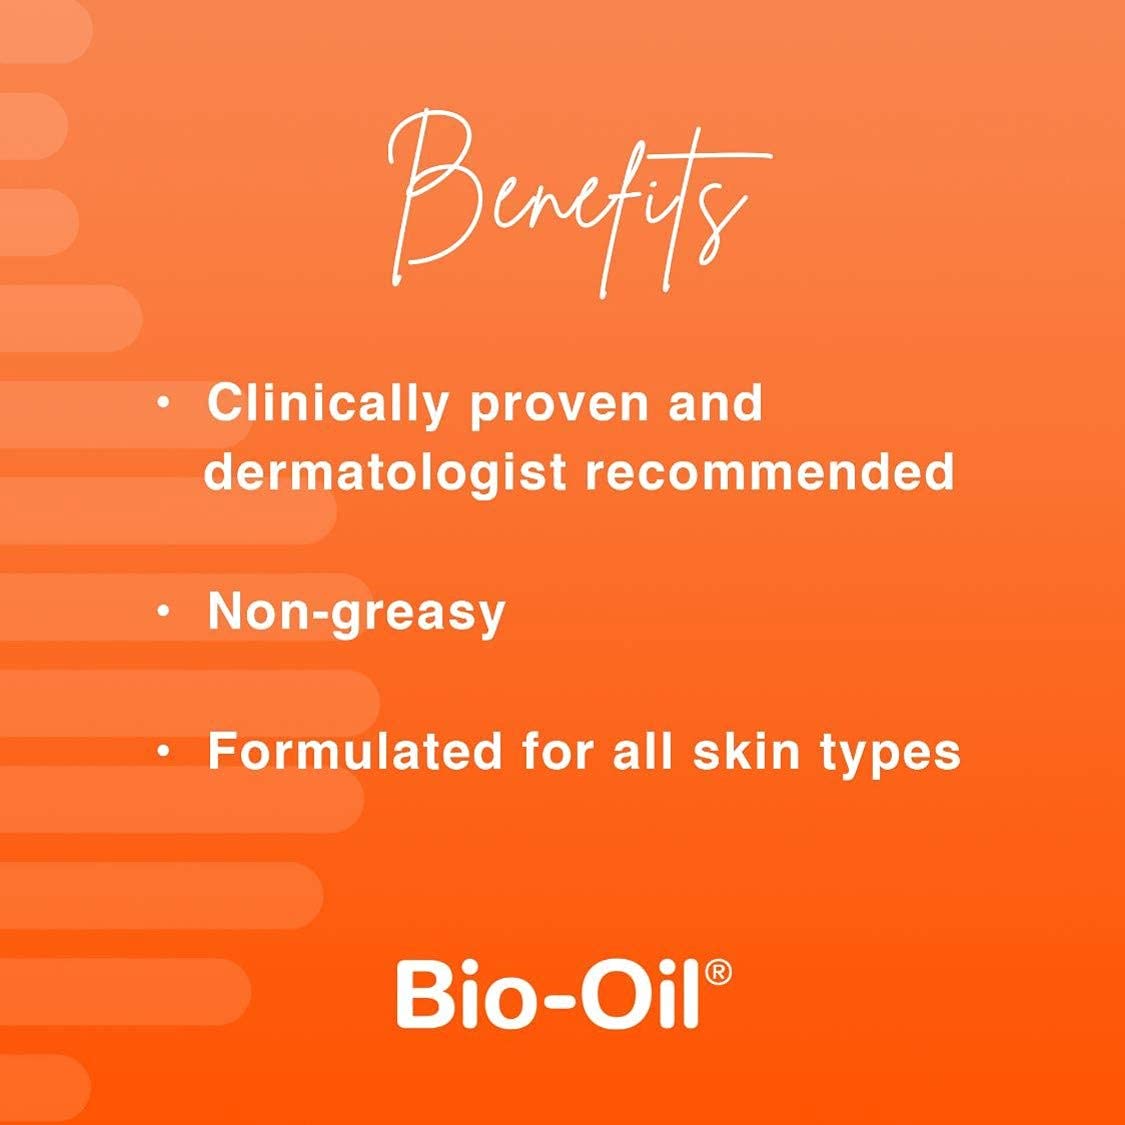 Bio-Oil Skincare Oil, Body Oil for Scars and Stretchmarks 4.2 Fl Oz - Brilliance New York Online